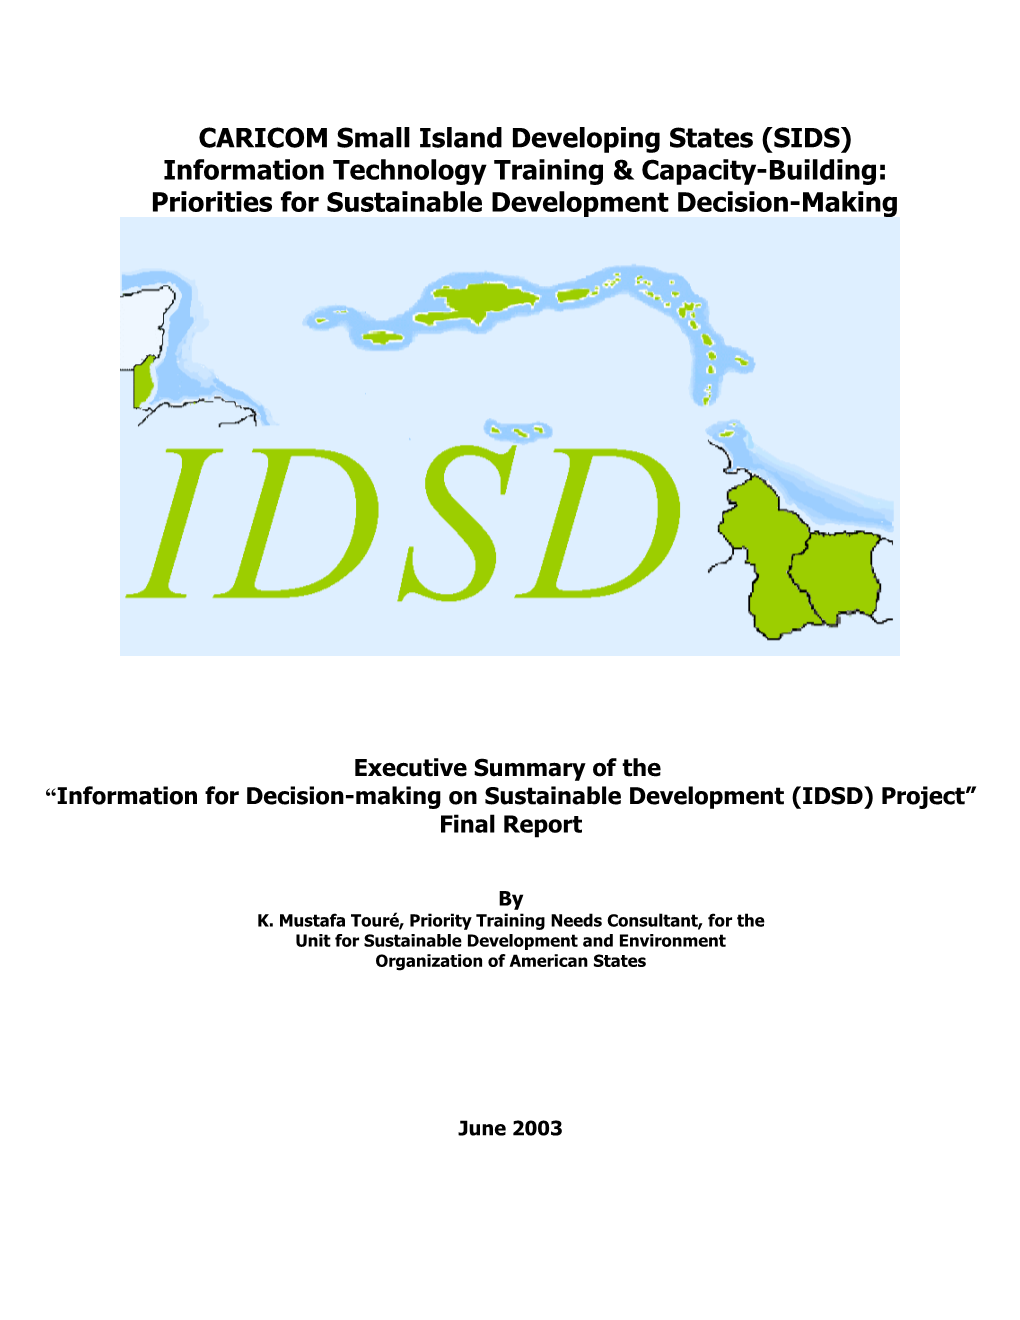 May 2003 Jamaica IDSD Schedule